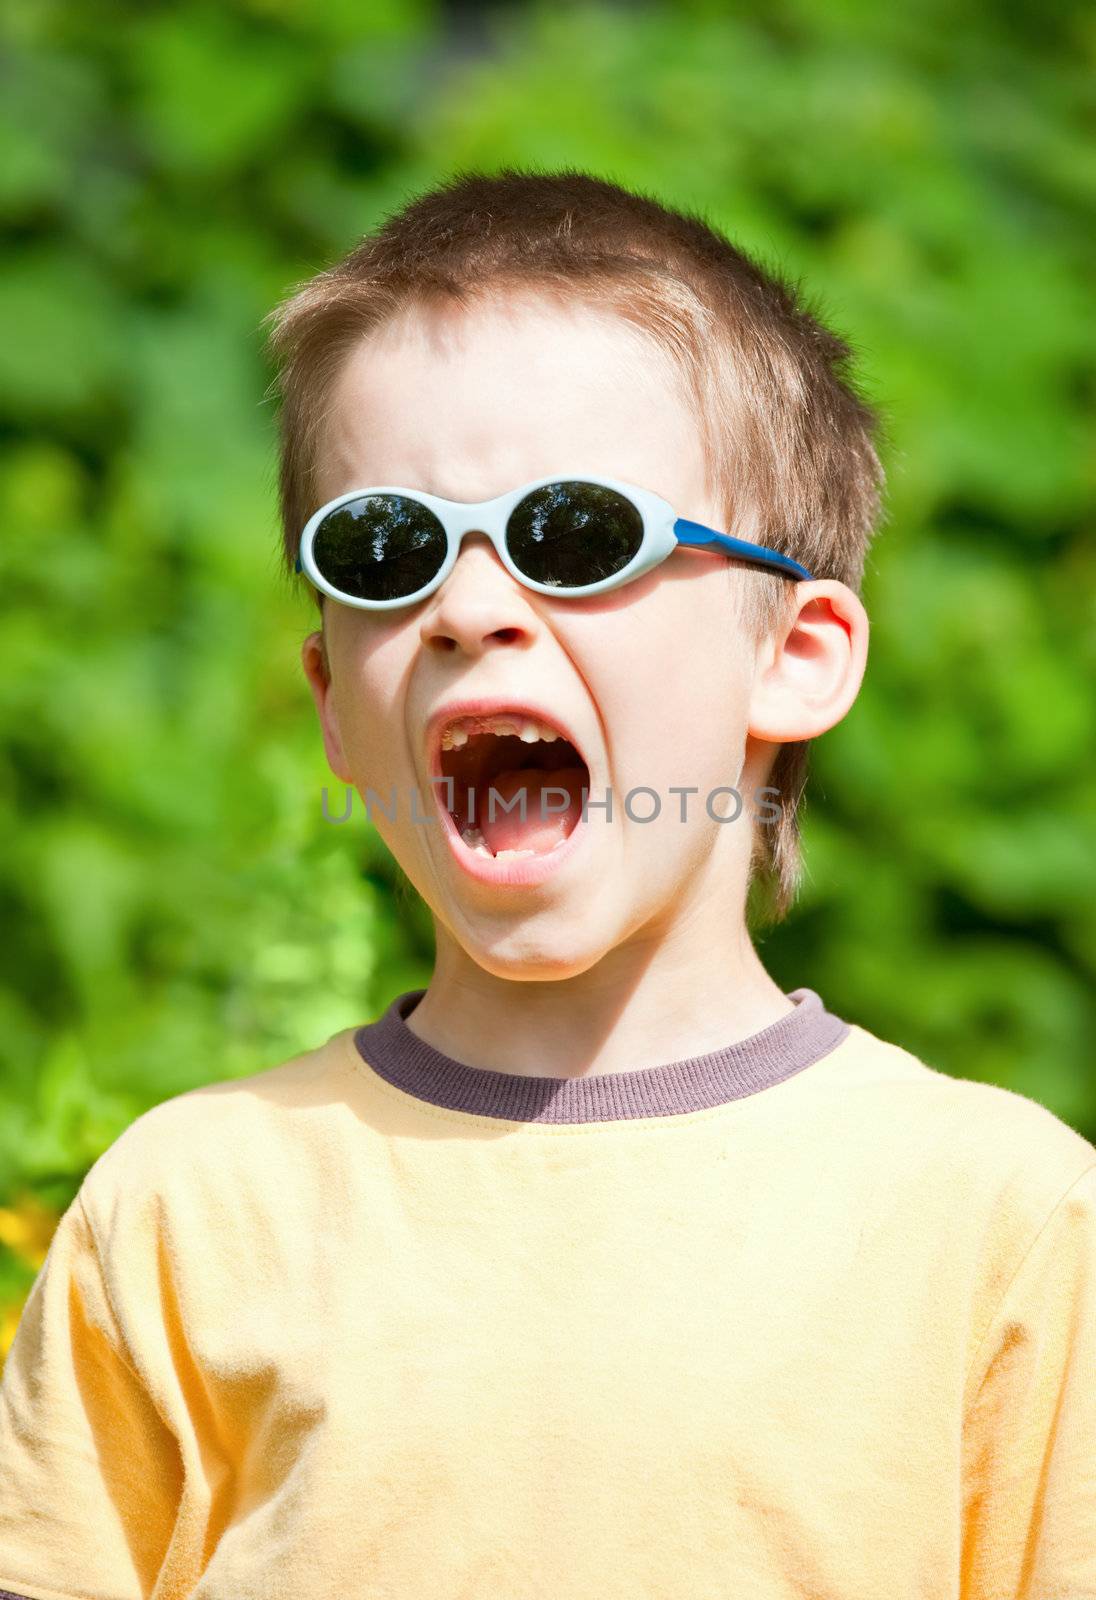 Young boy wearing sunglasses yelling